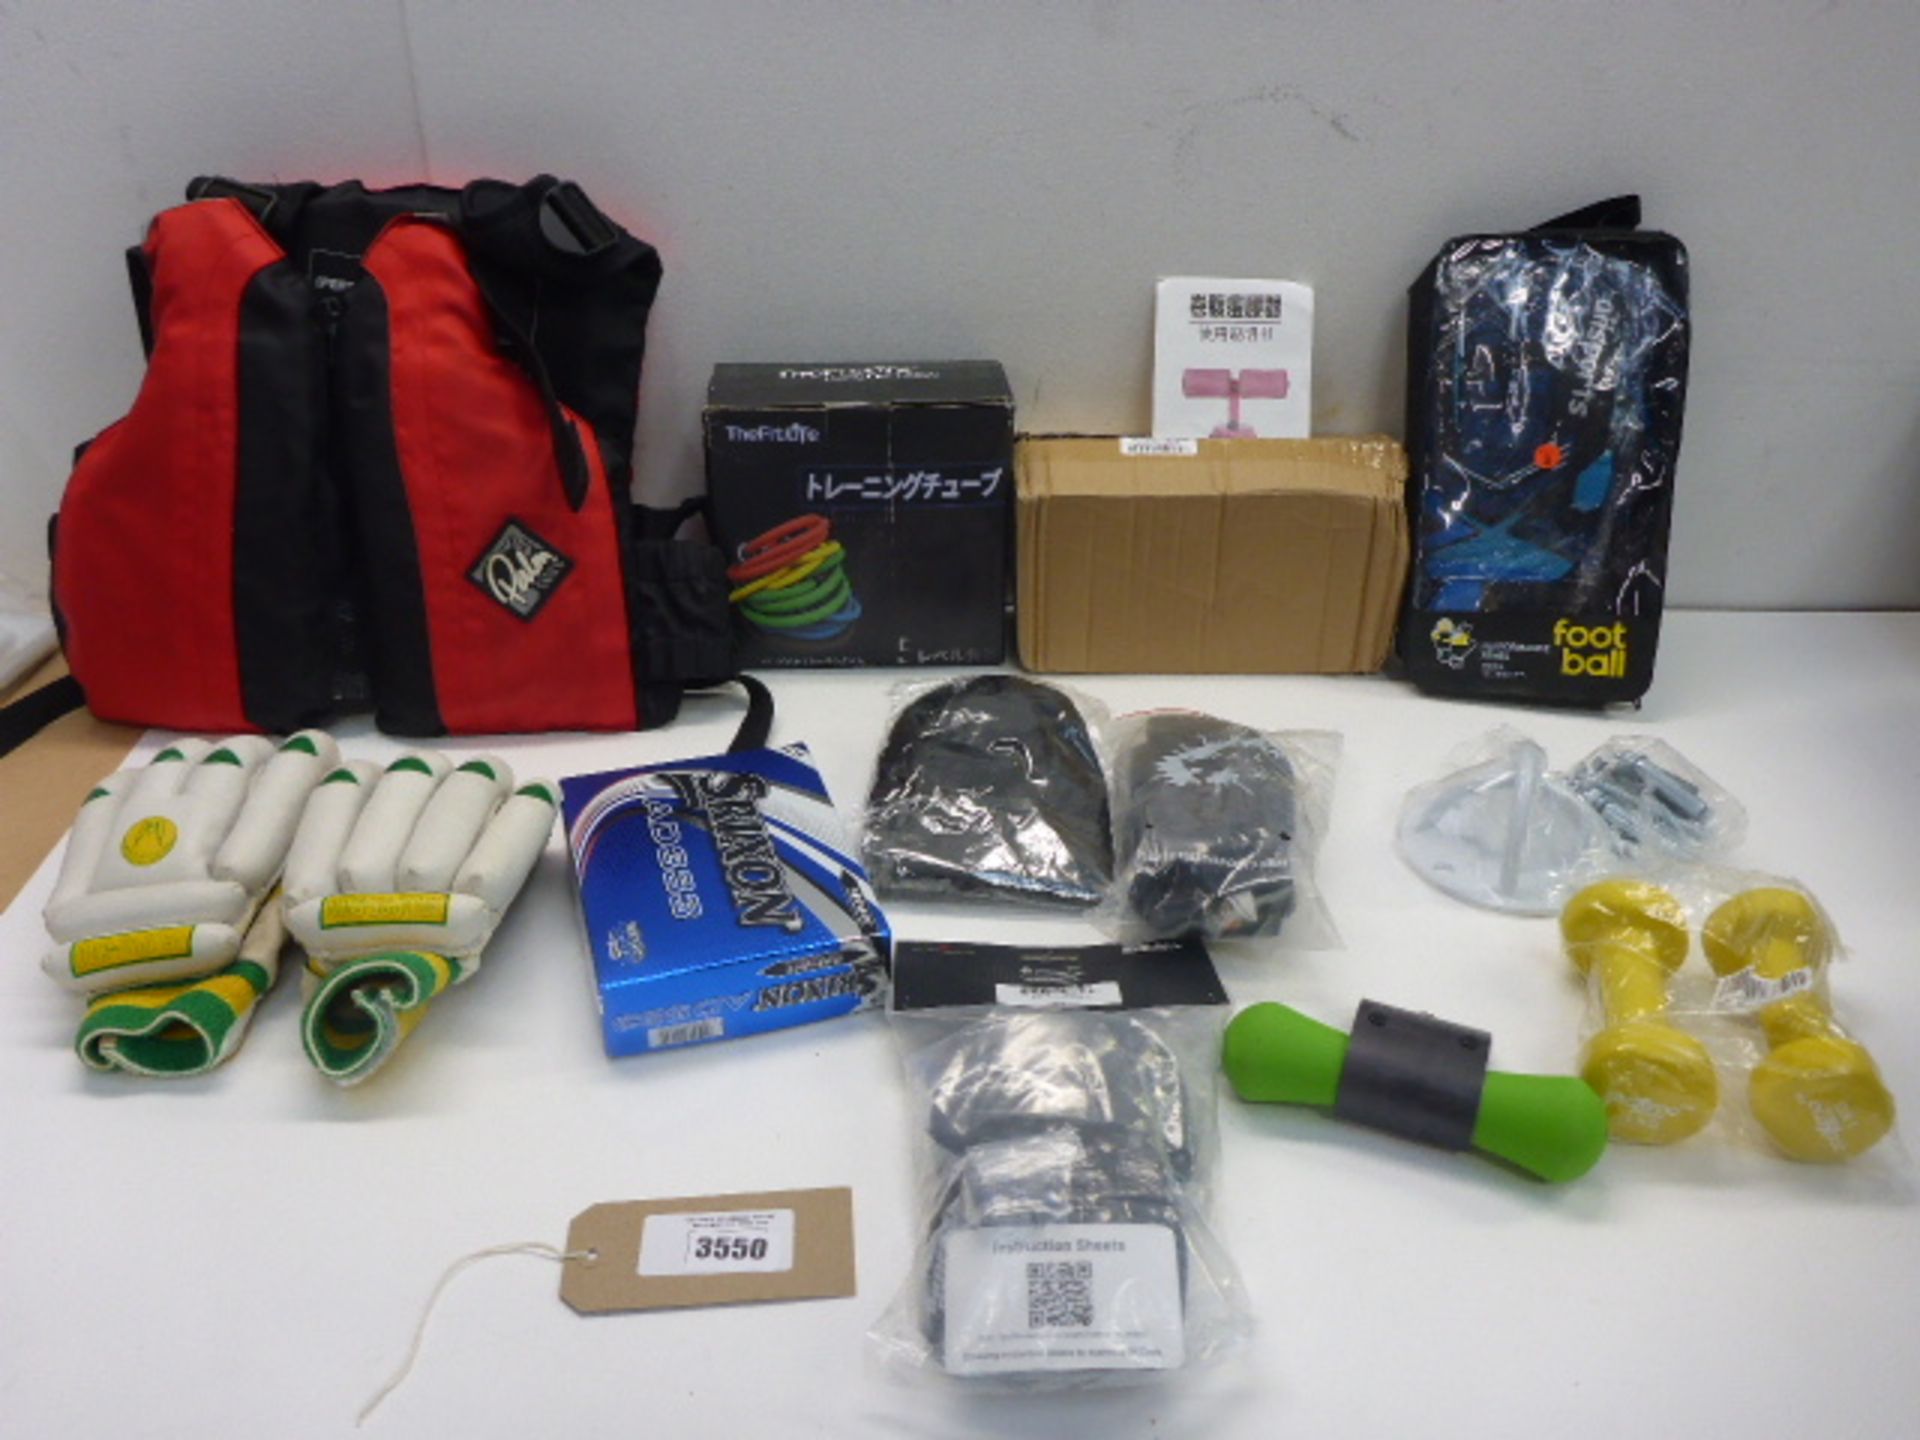 Erog injected armrest kit, Palm bouyancy aid, resistance bands, golf balls, cricket & football